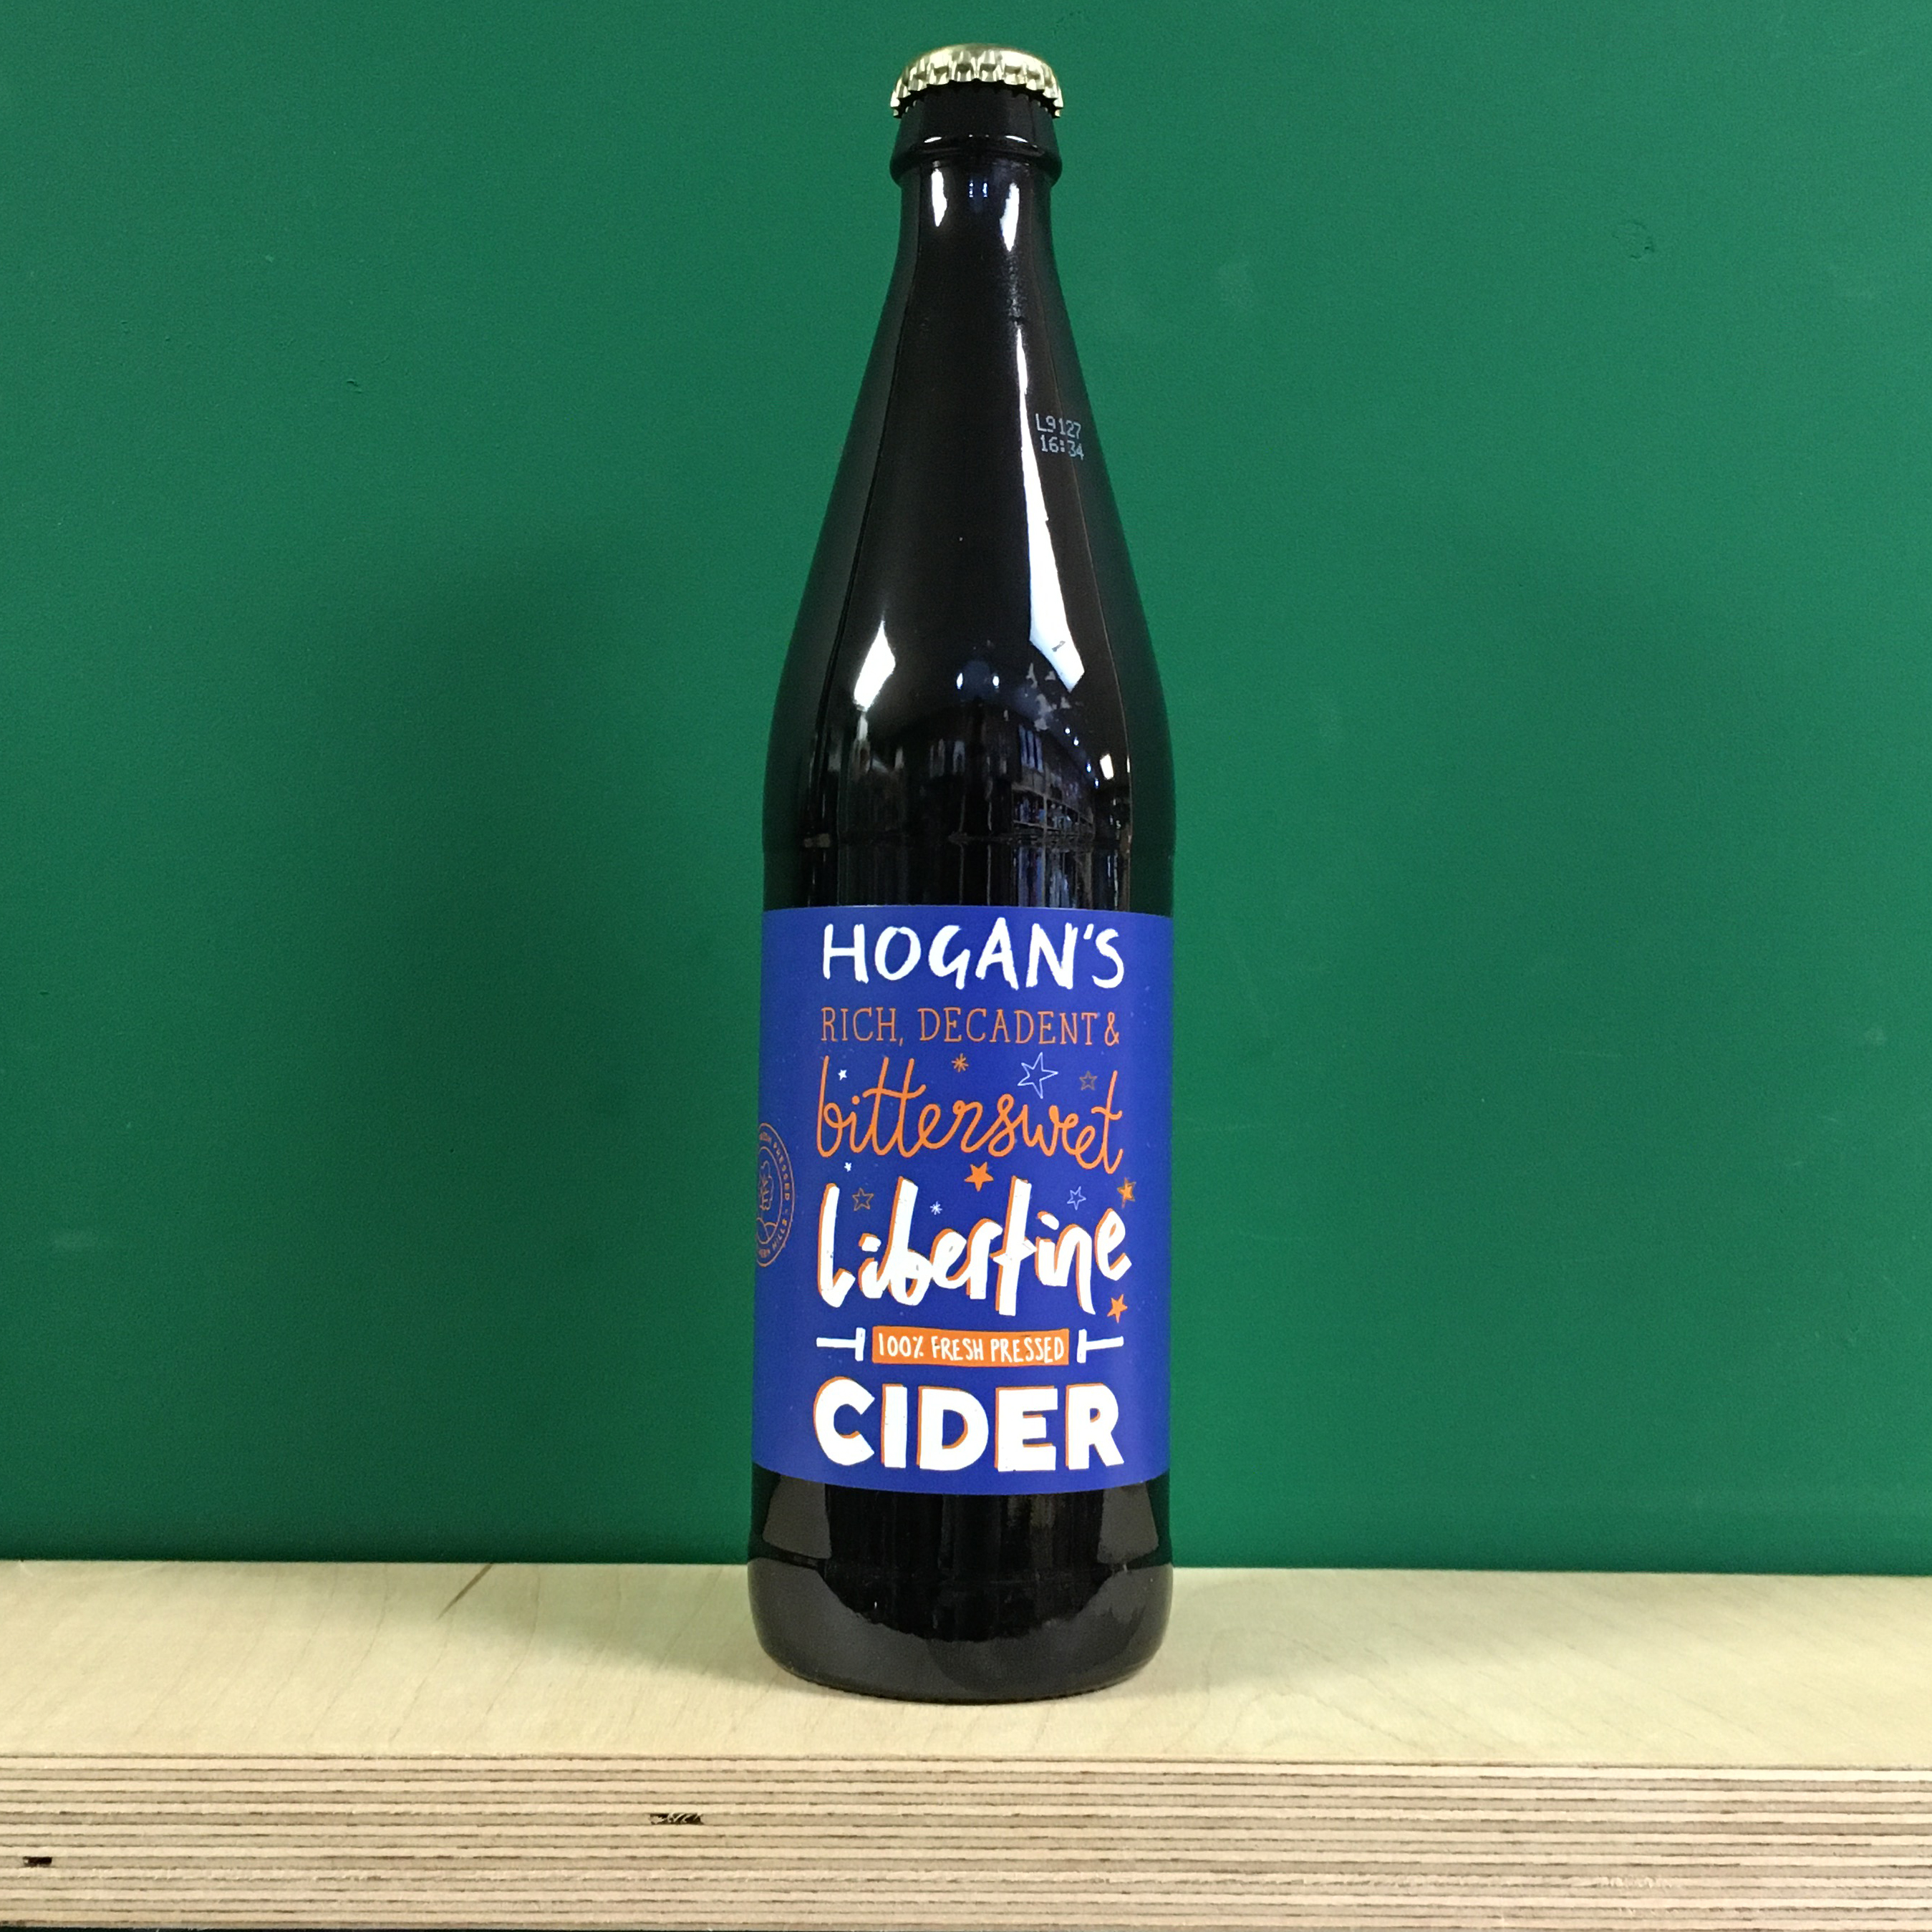 Hogan’s Cider Libertine